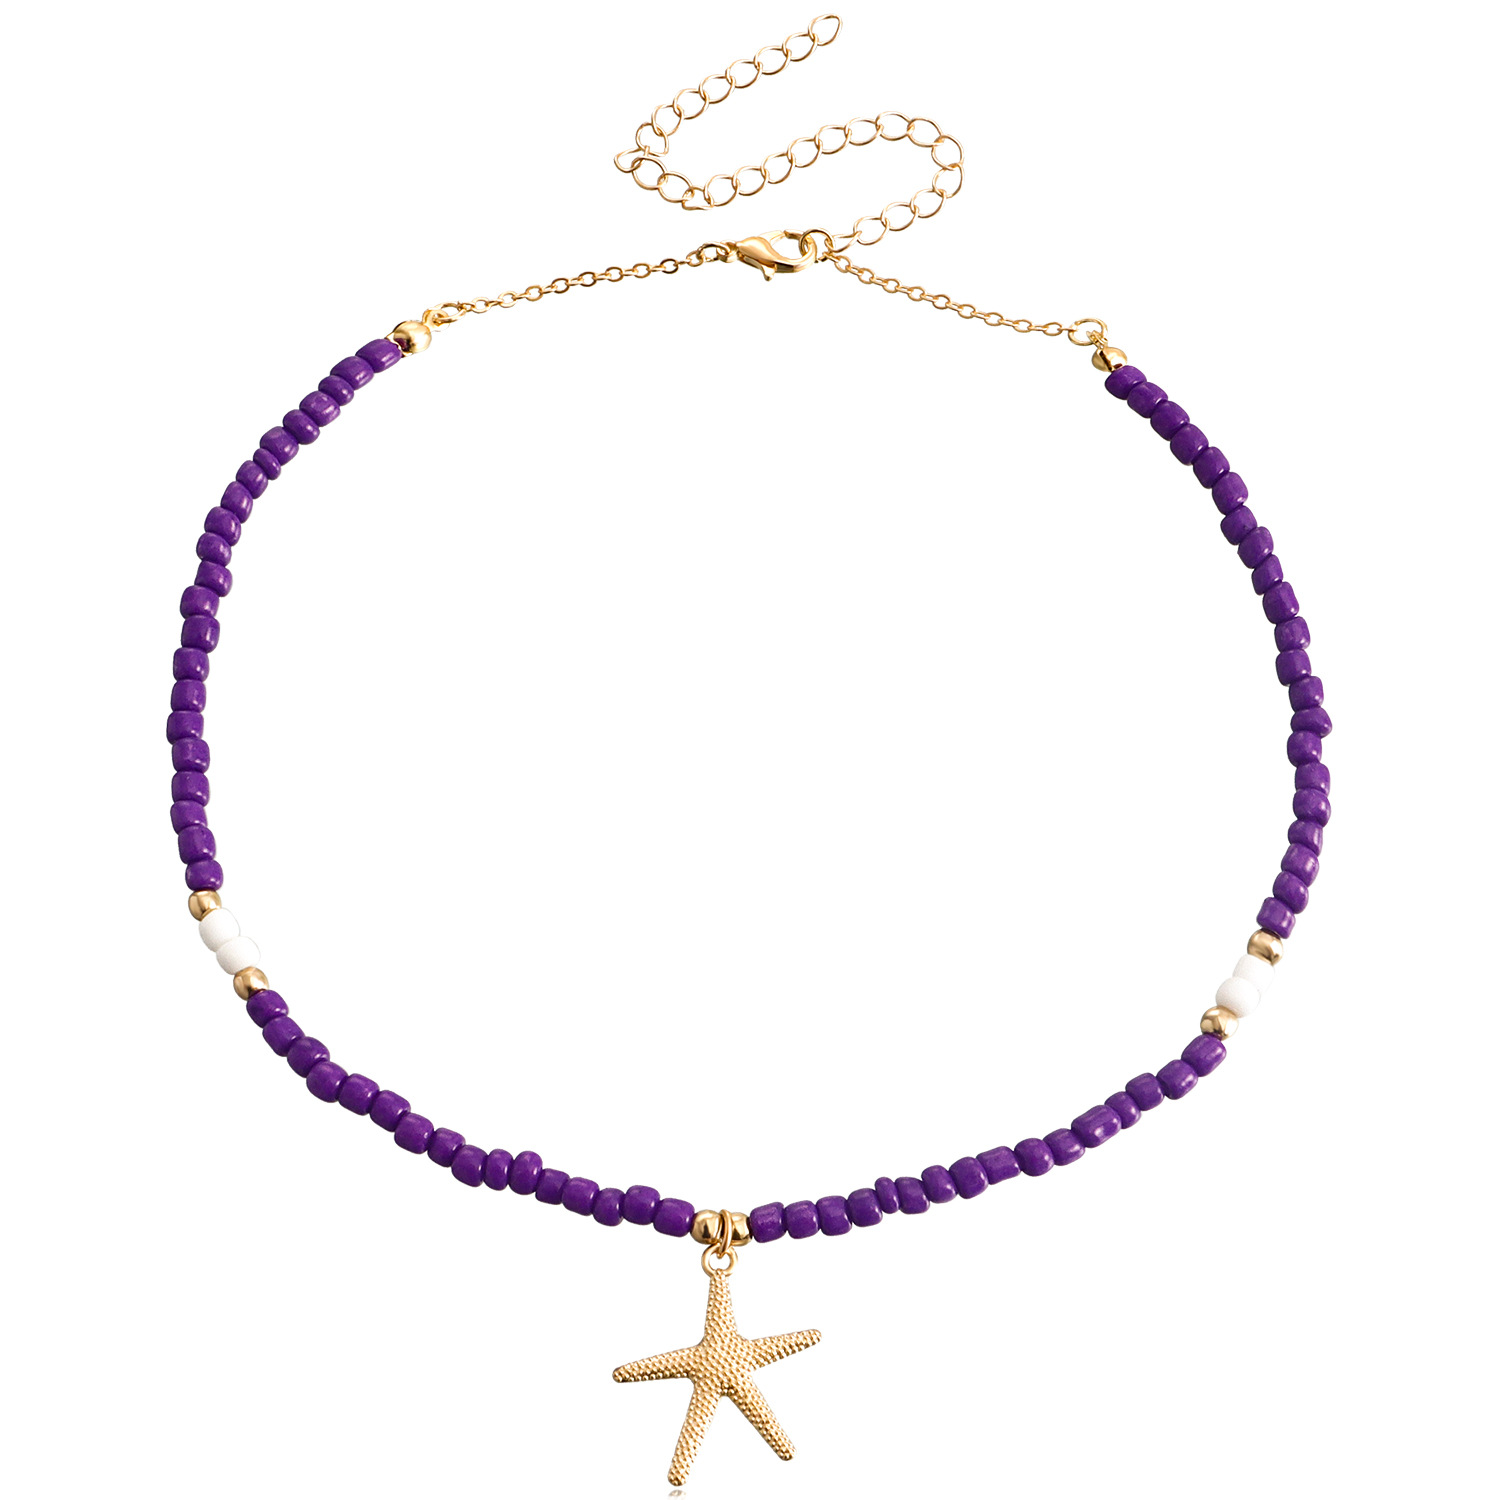 3:3# purple rice beads